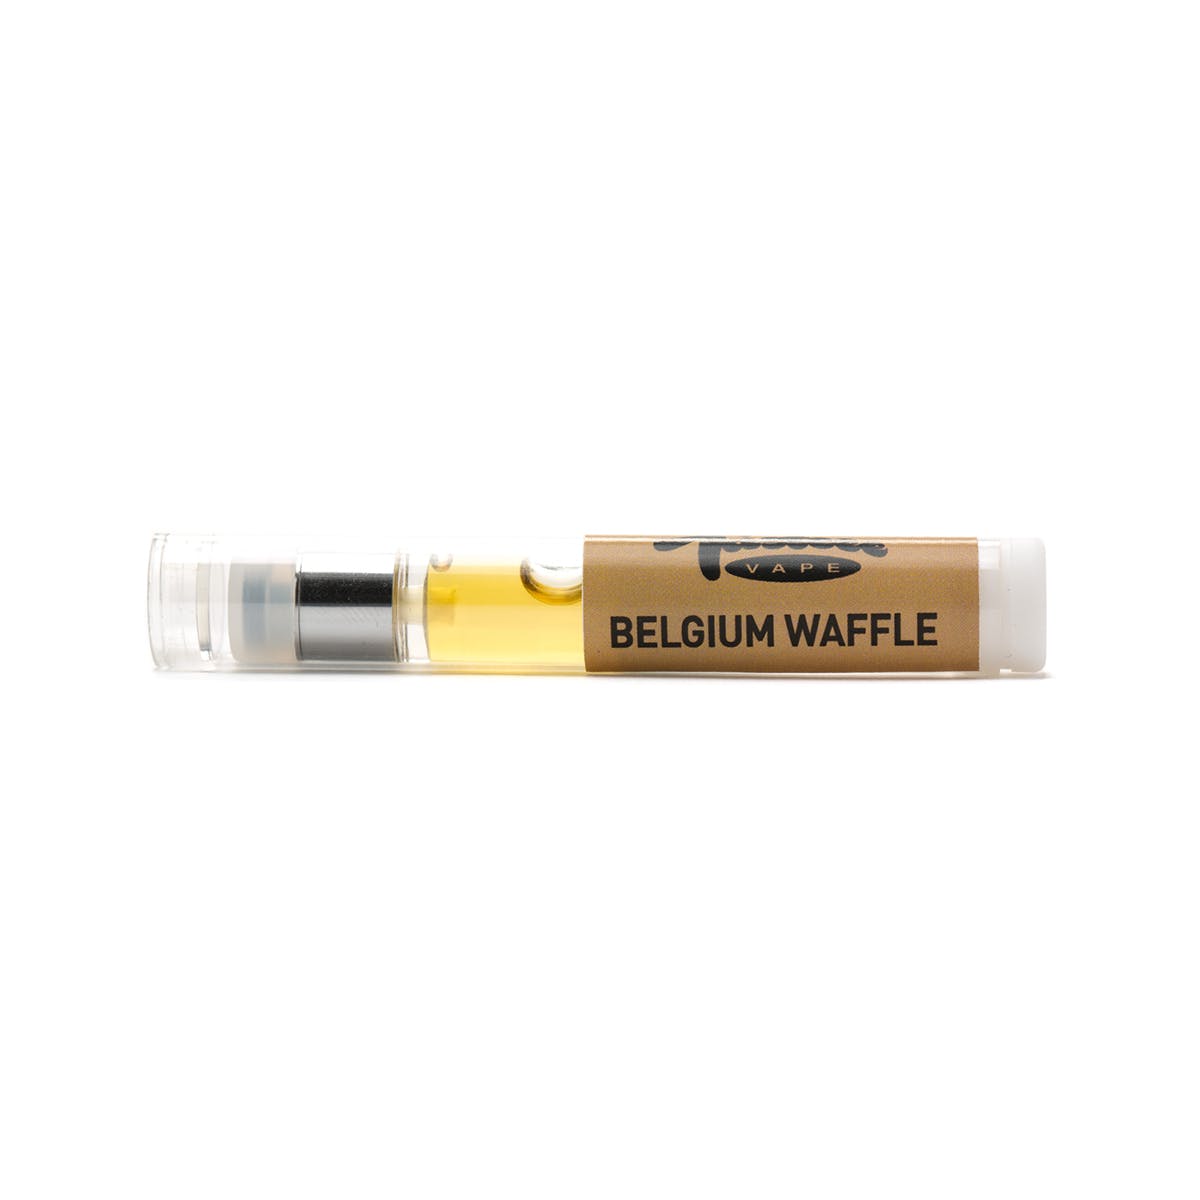 Belgium Waffle Tasteee Cartridge